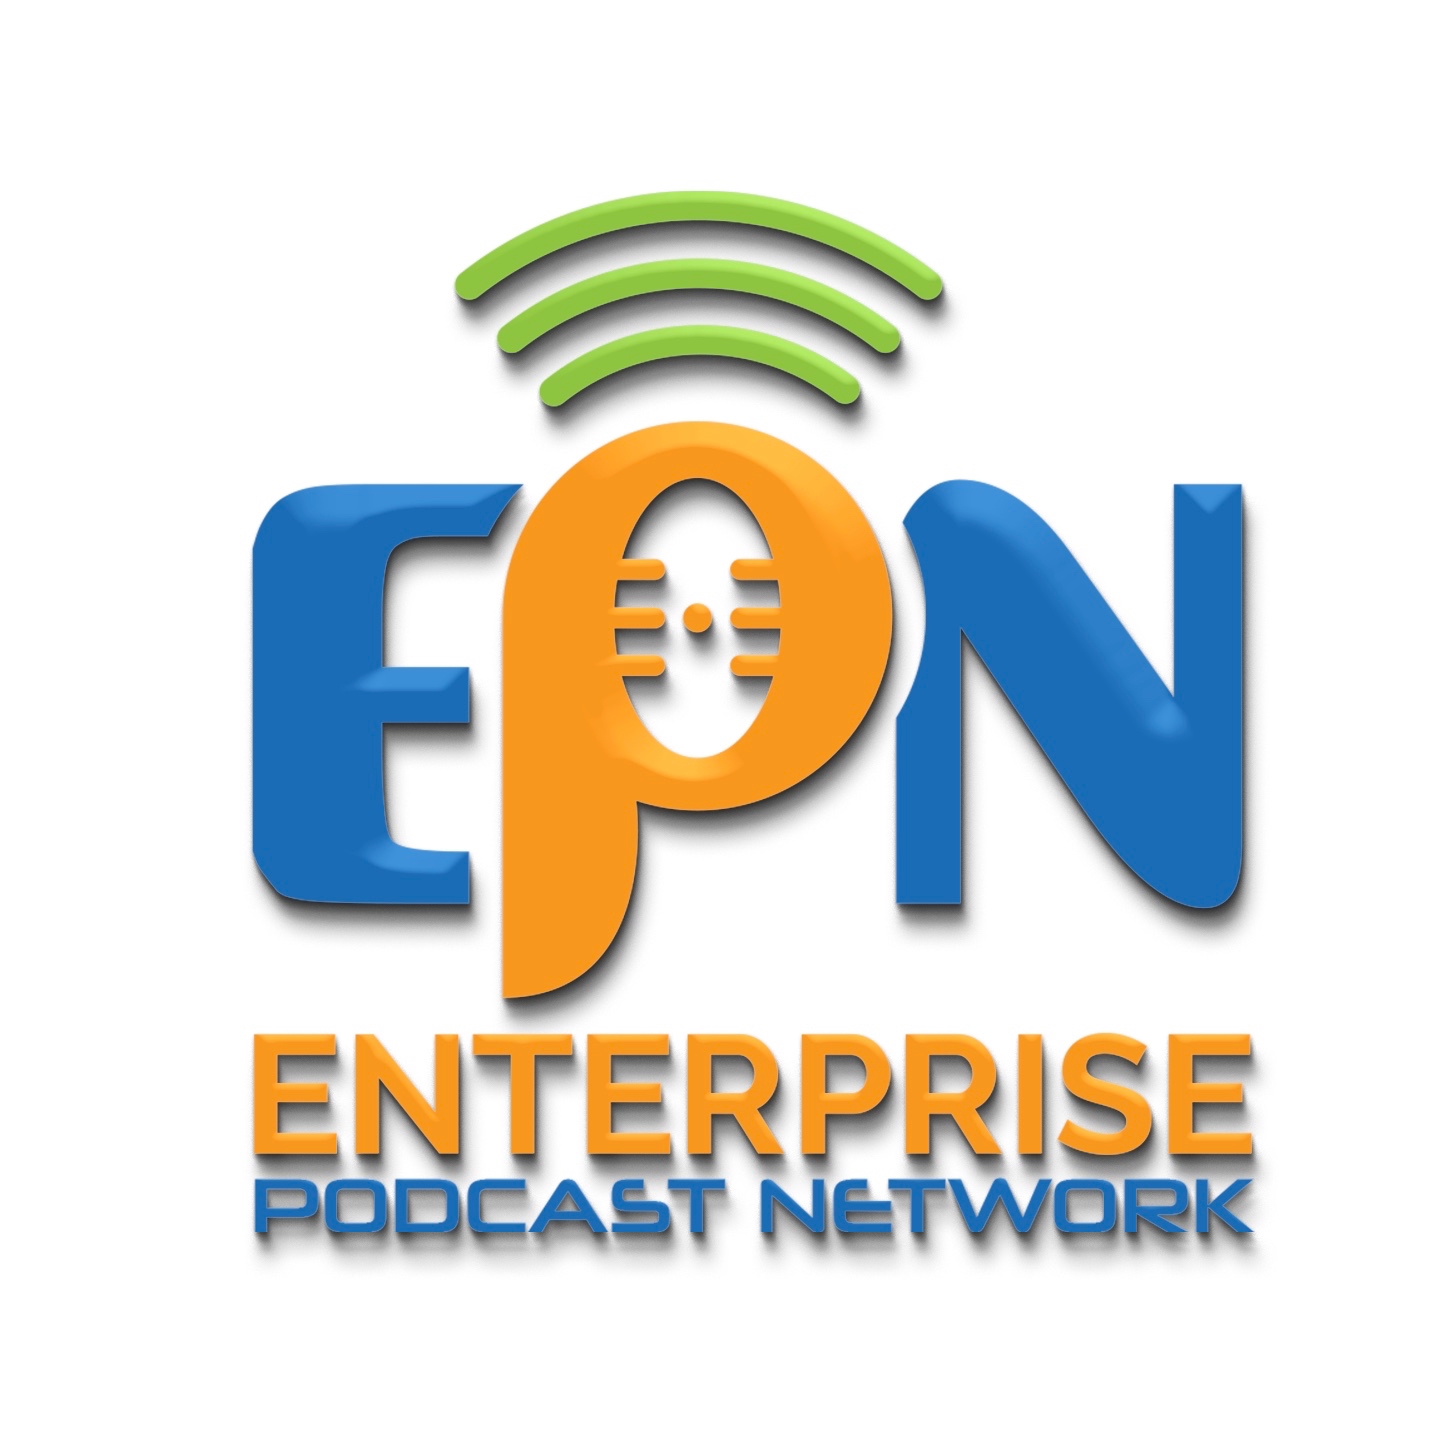 Enterprise Podcast Network - EPN